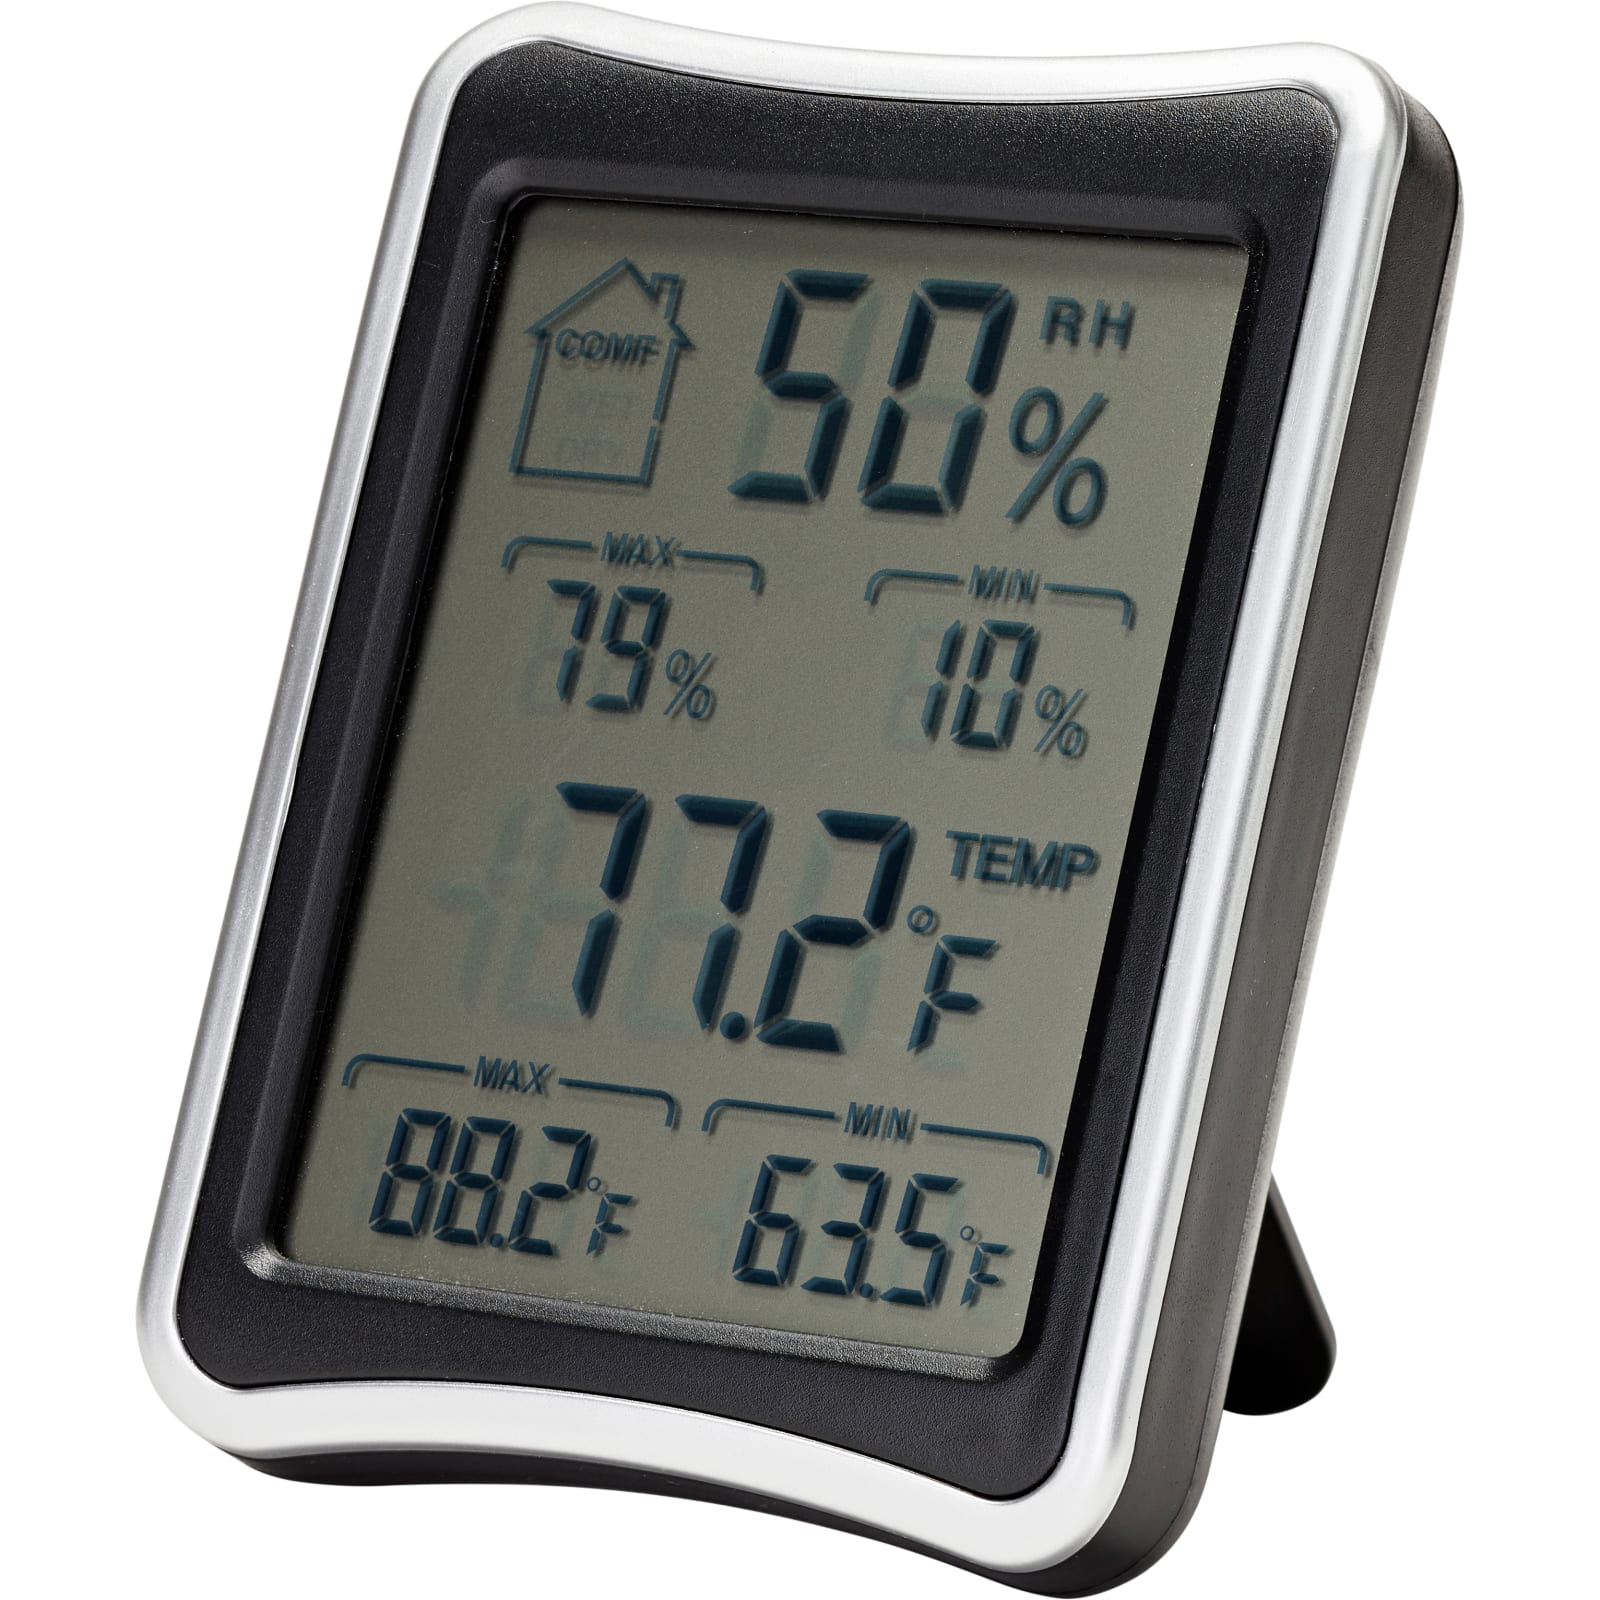 Wireless Gun Safe, Digital Hygrometer and Thermometer